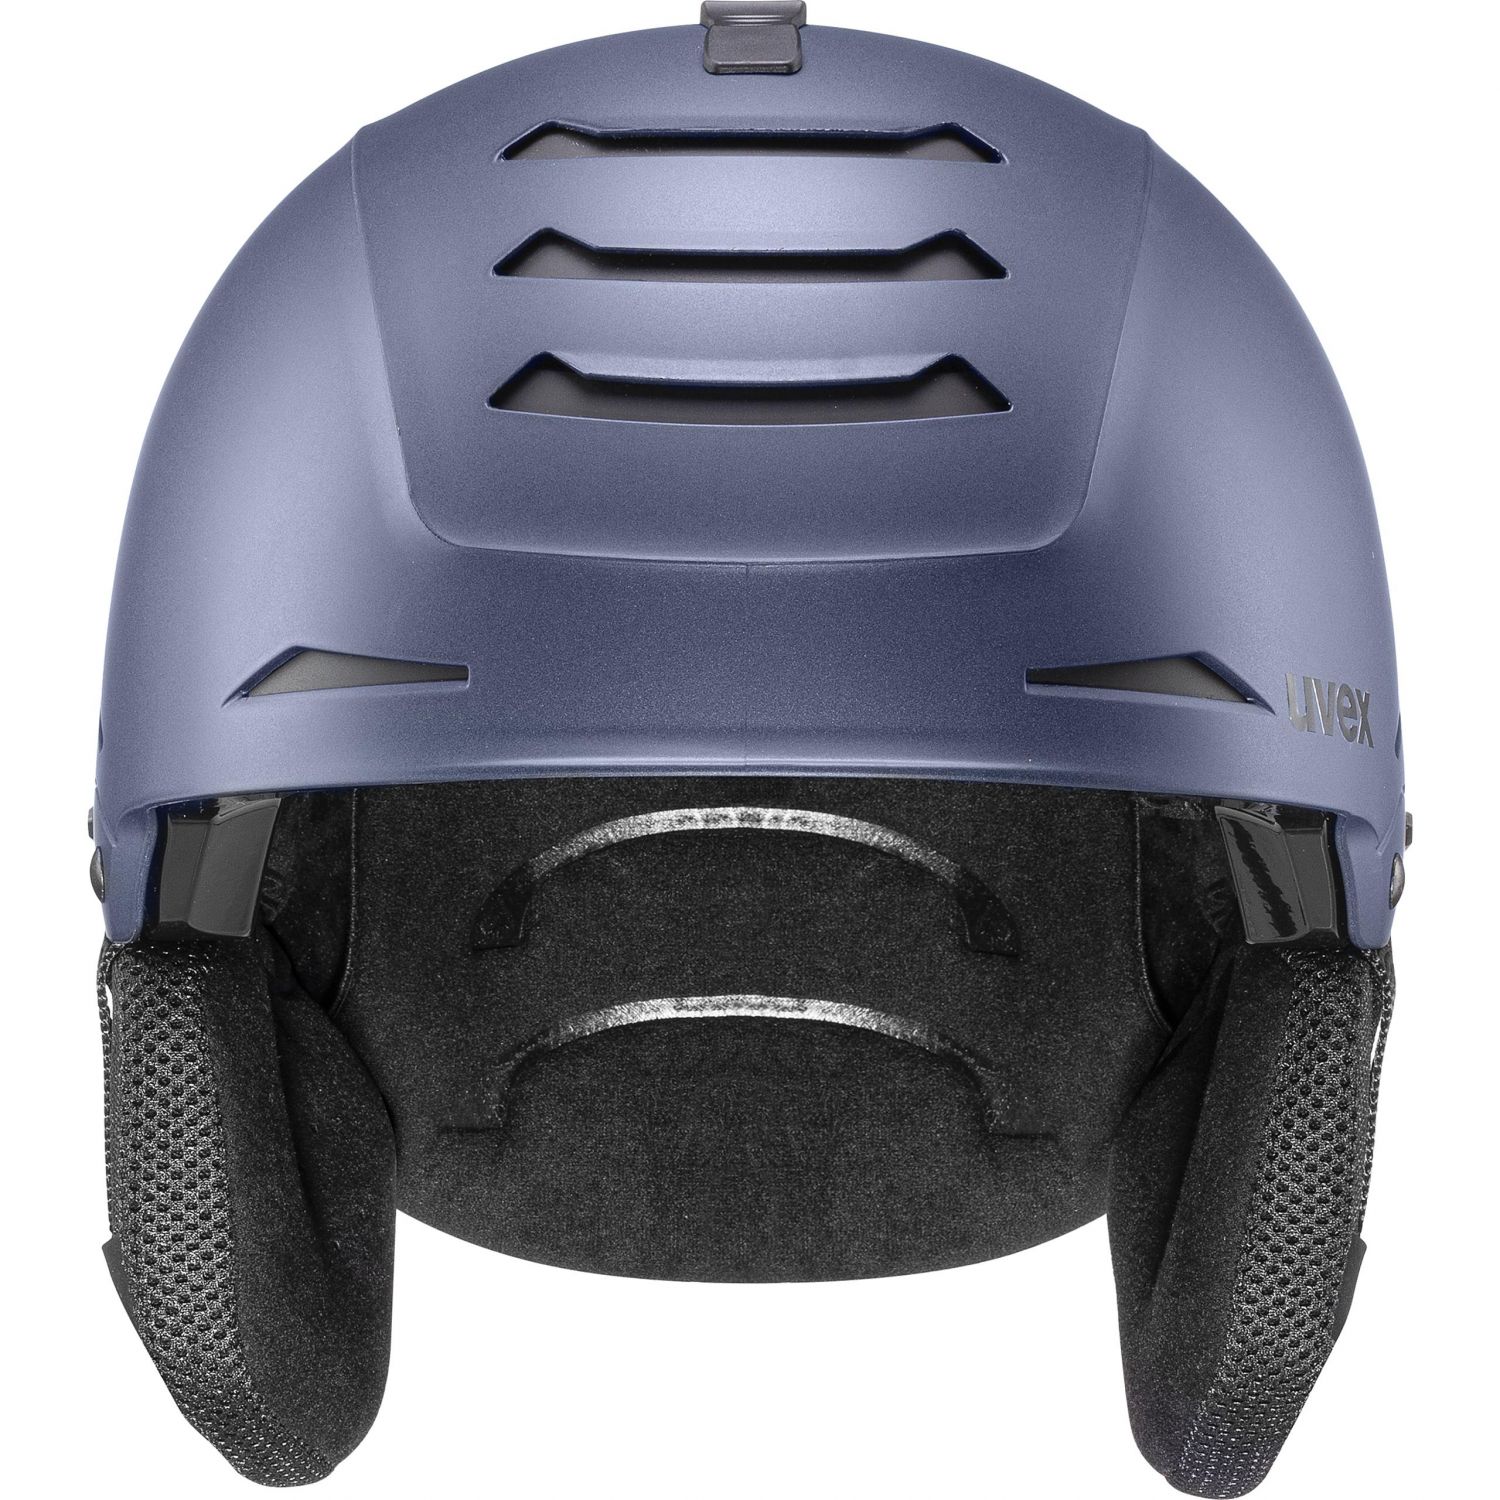 Uvex Legend ski helmet, dark ink